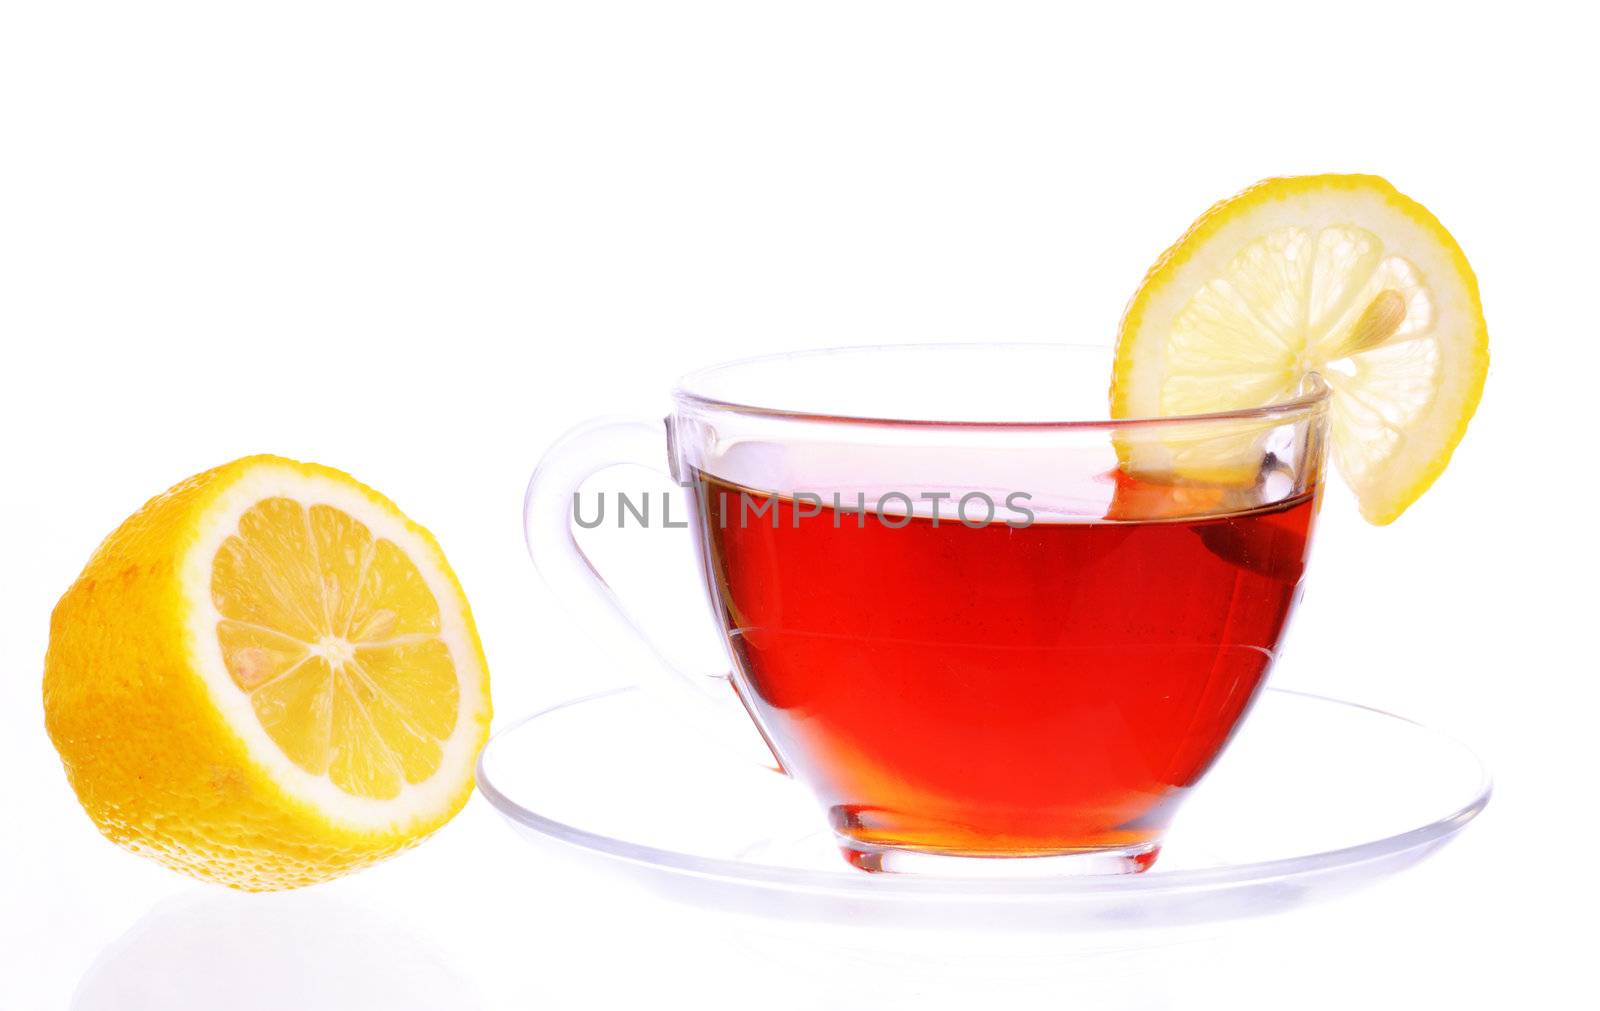 A cup of black tea with lemon by iryna_rasko